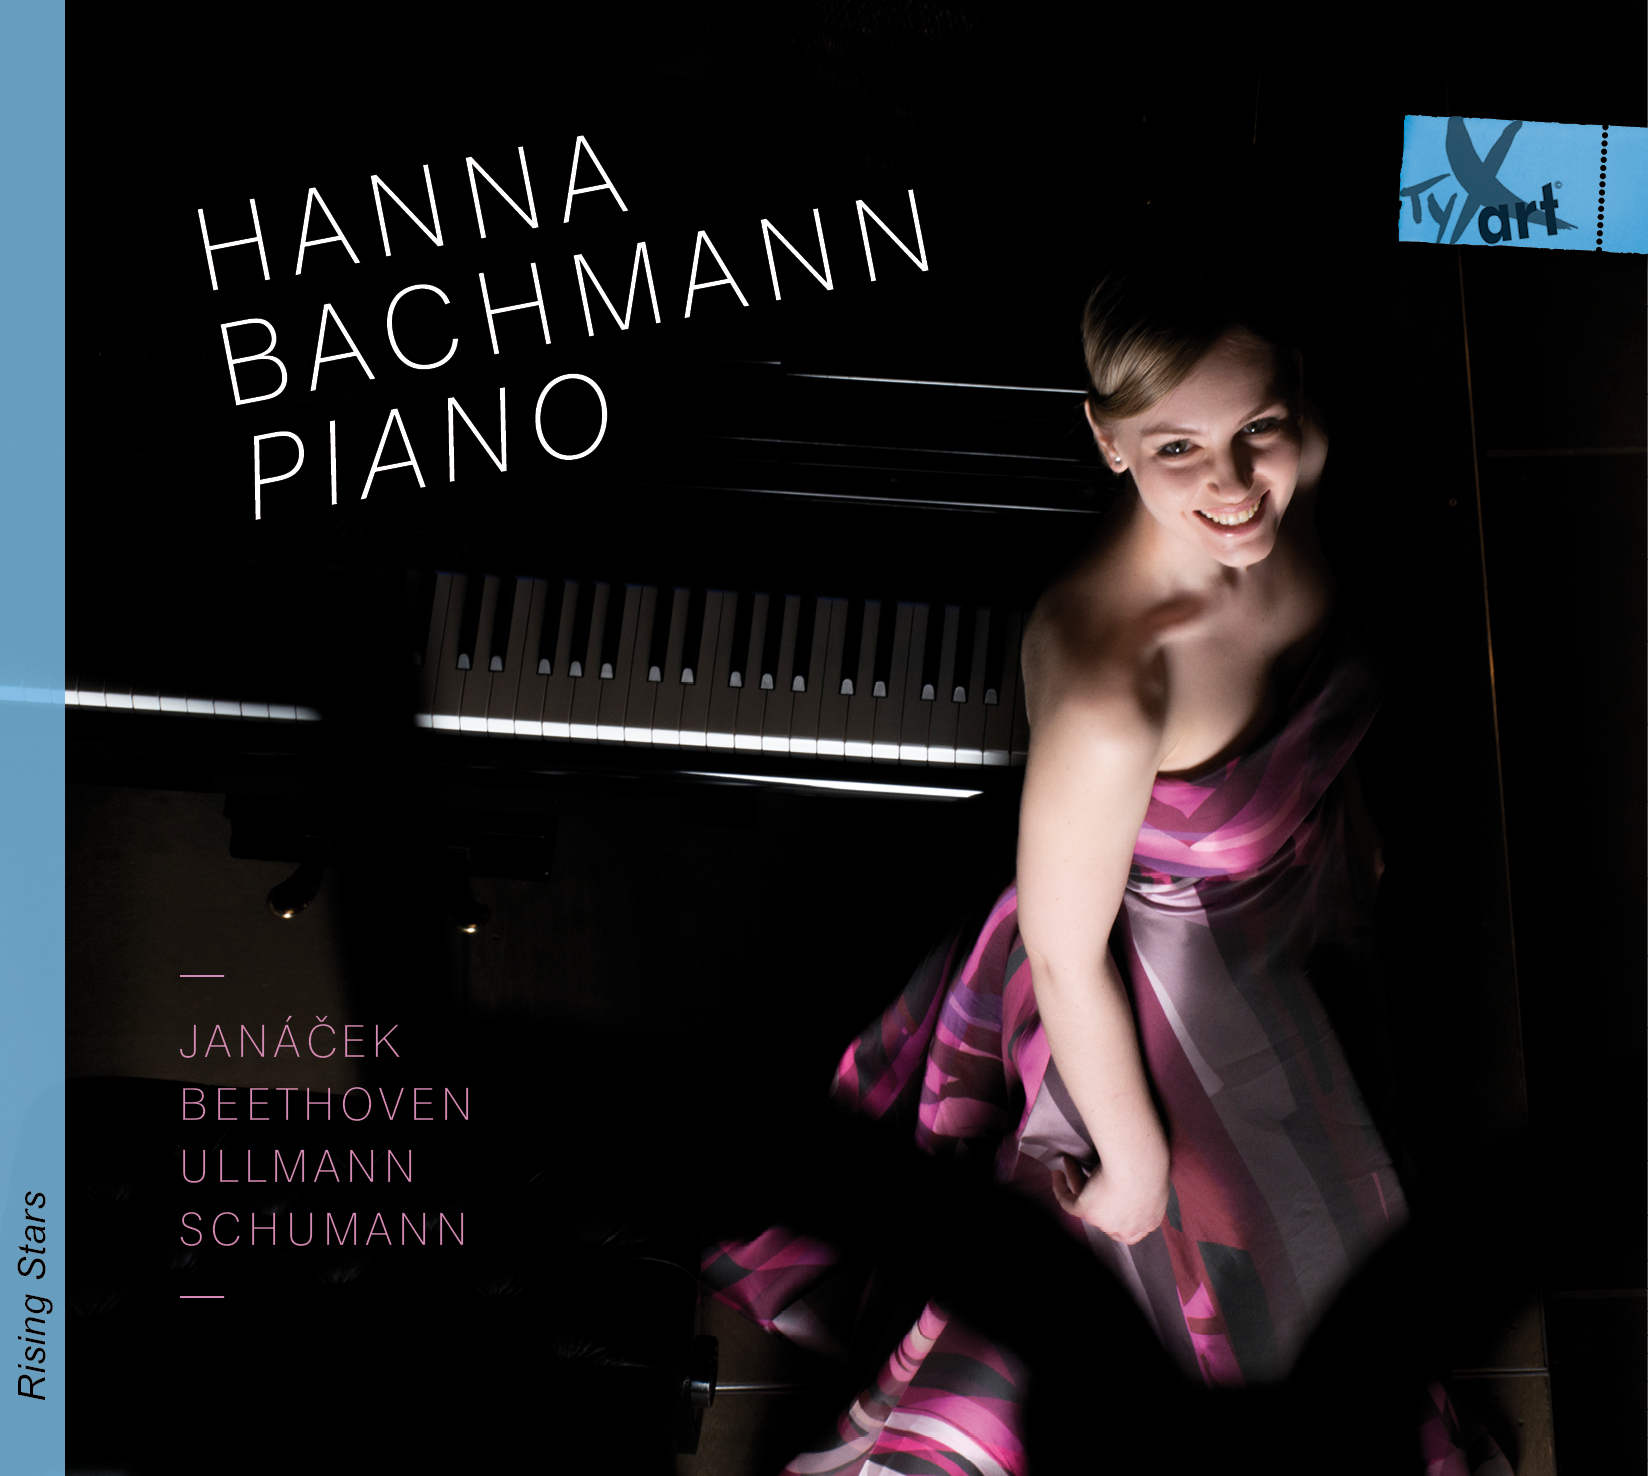 Hanna Bachmann, Piano - Janáček, Beethoven, Ullmann, Schumann